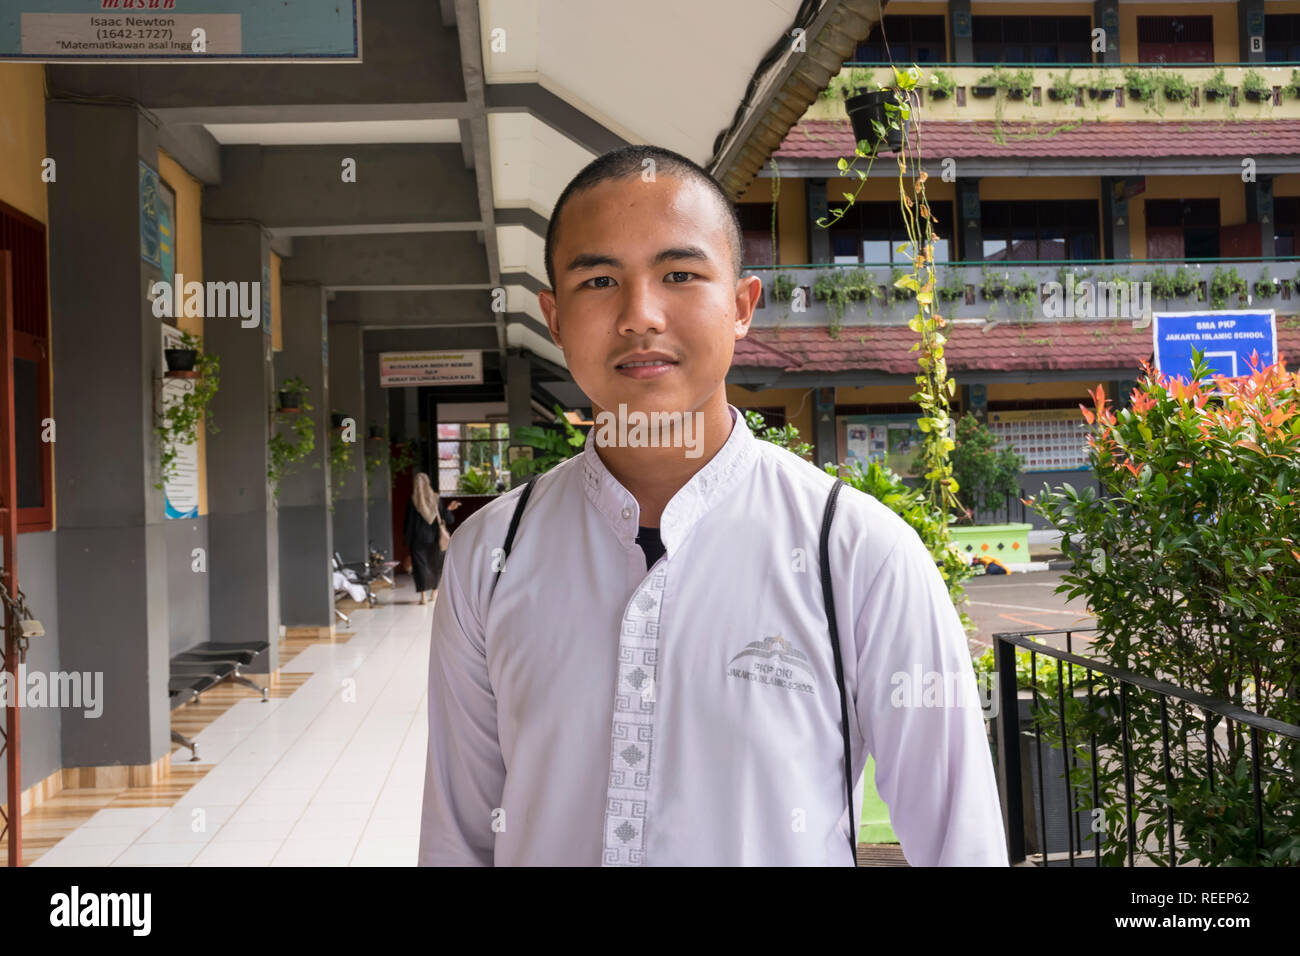 8.30, Dayak Junge in Uniform, IndonesianBook Stockfoto